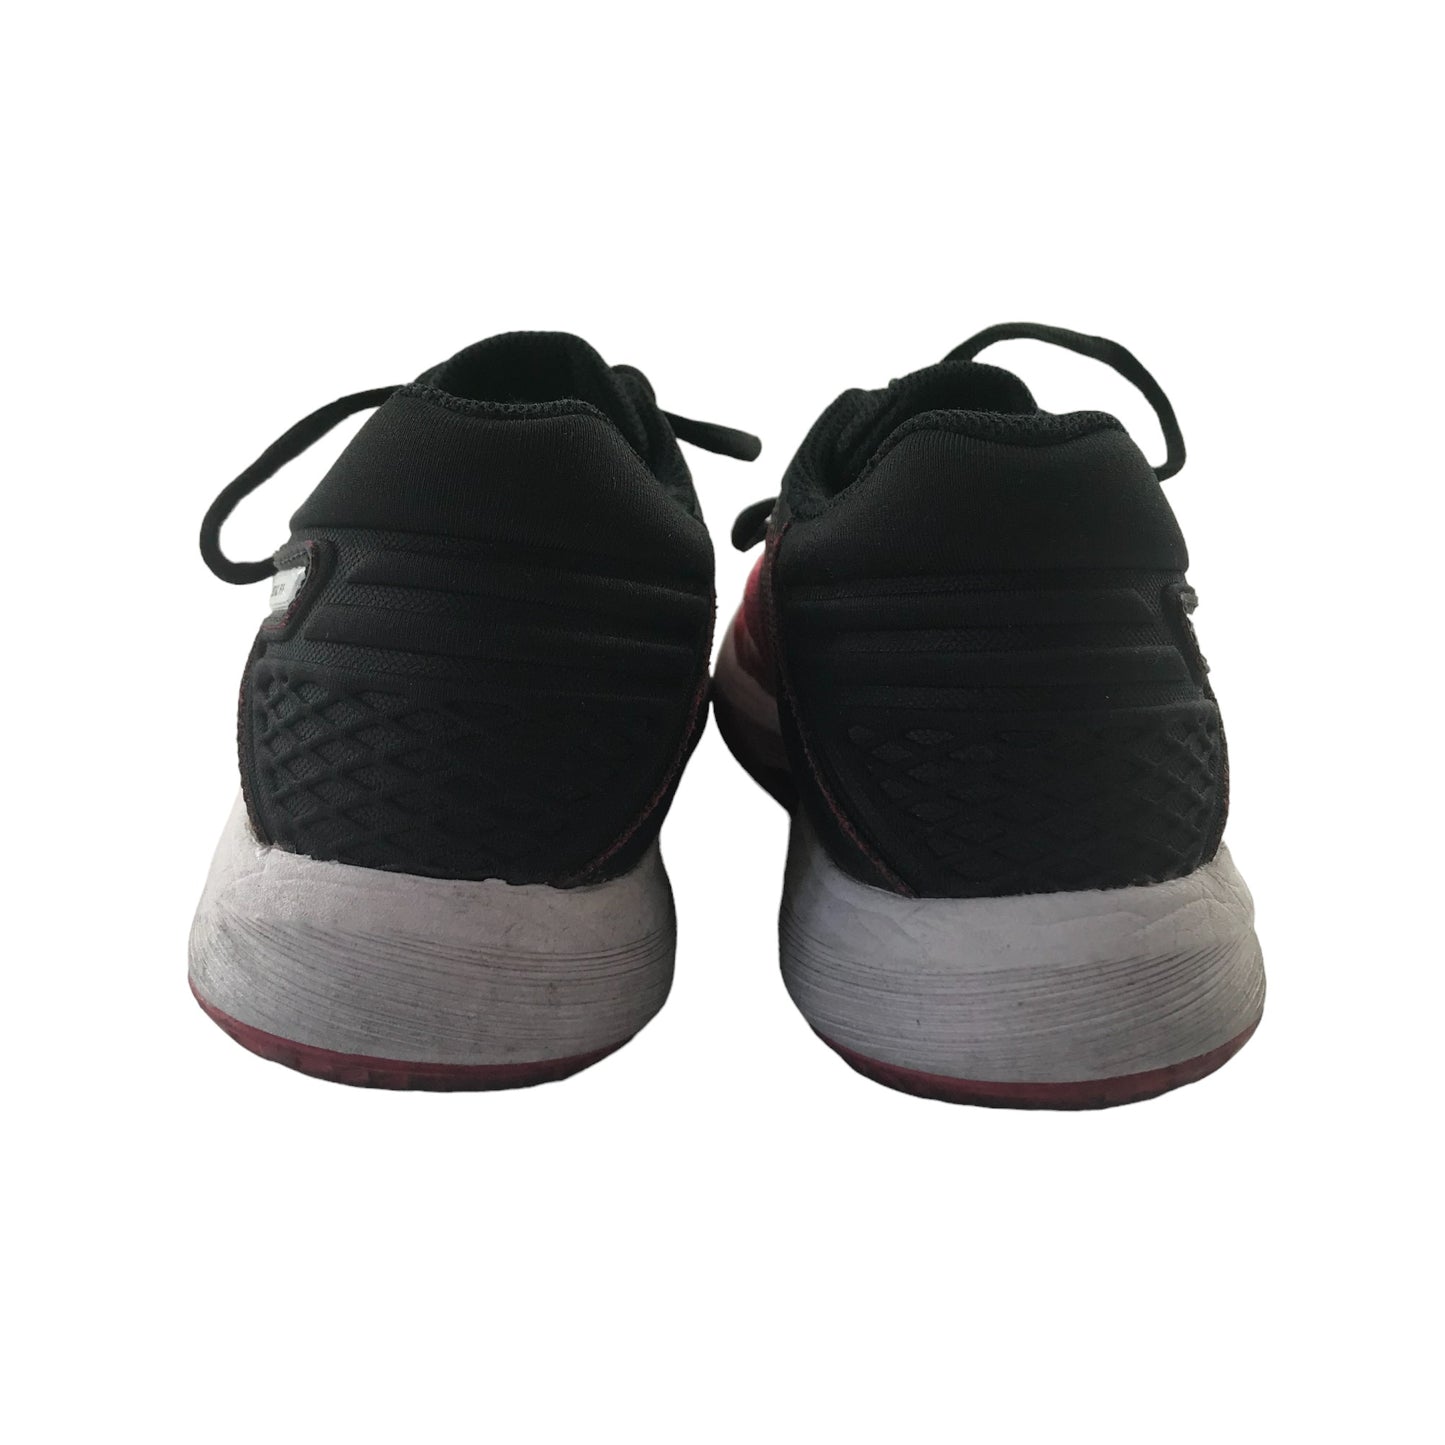 Asics Gel Netburner Ballistic Trainers Shoe Size 7 Shiny Pink and Black